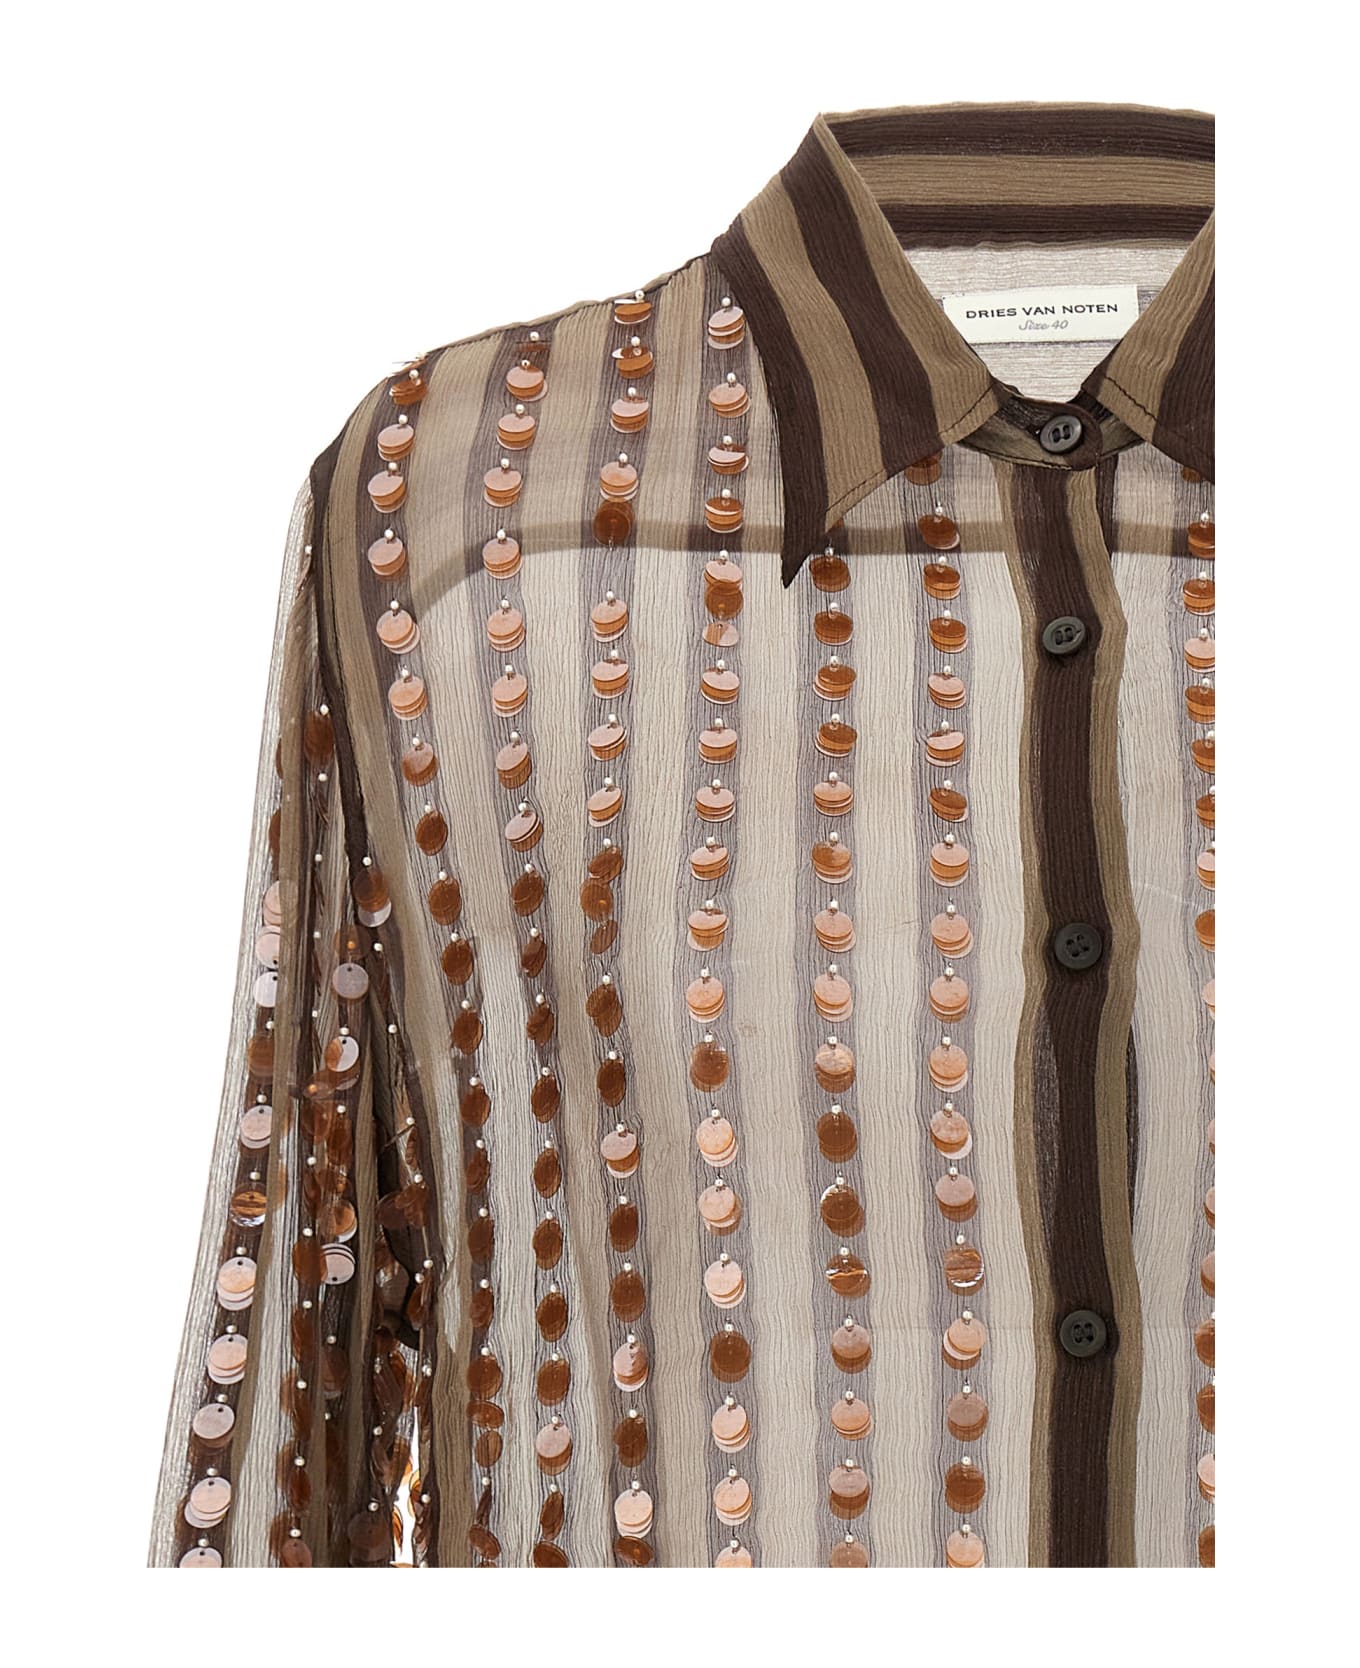 casablanca dream house padded jacket item 'chowy' Shirt - Brown